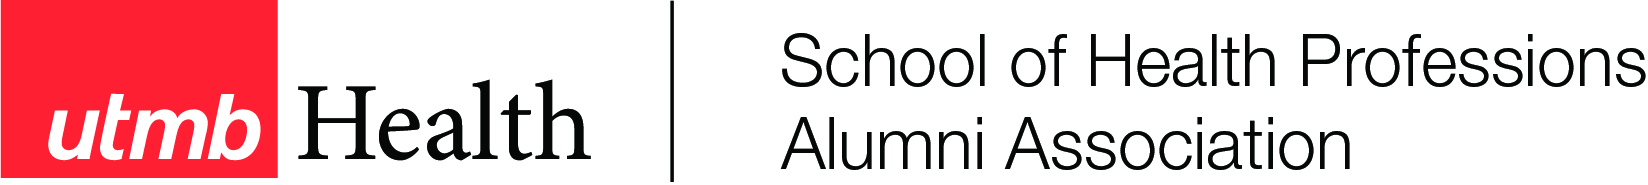 UTMB Health School of Health Professions Alumni Association logo